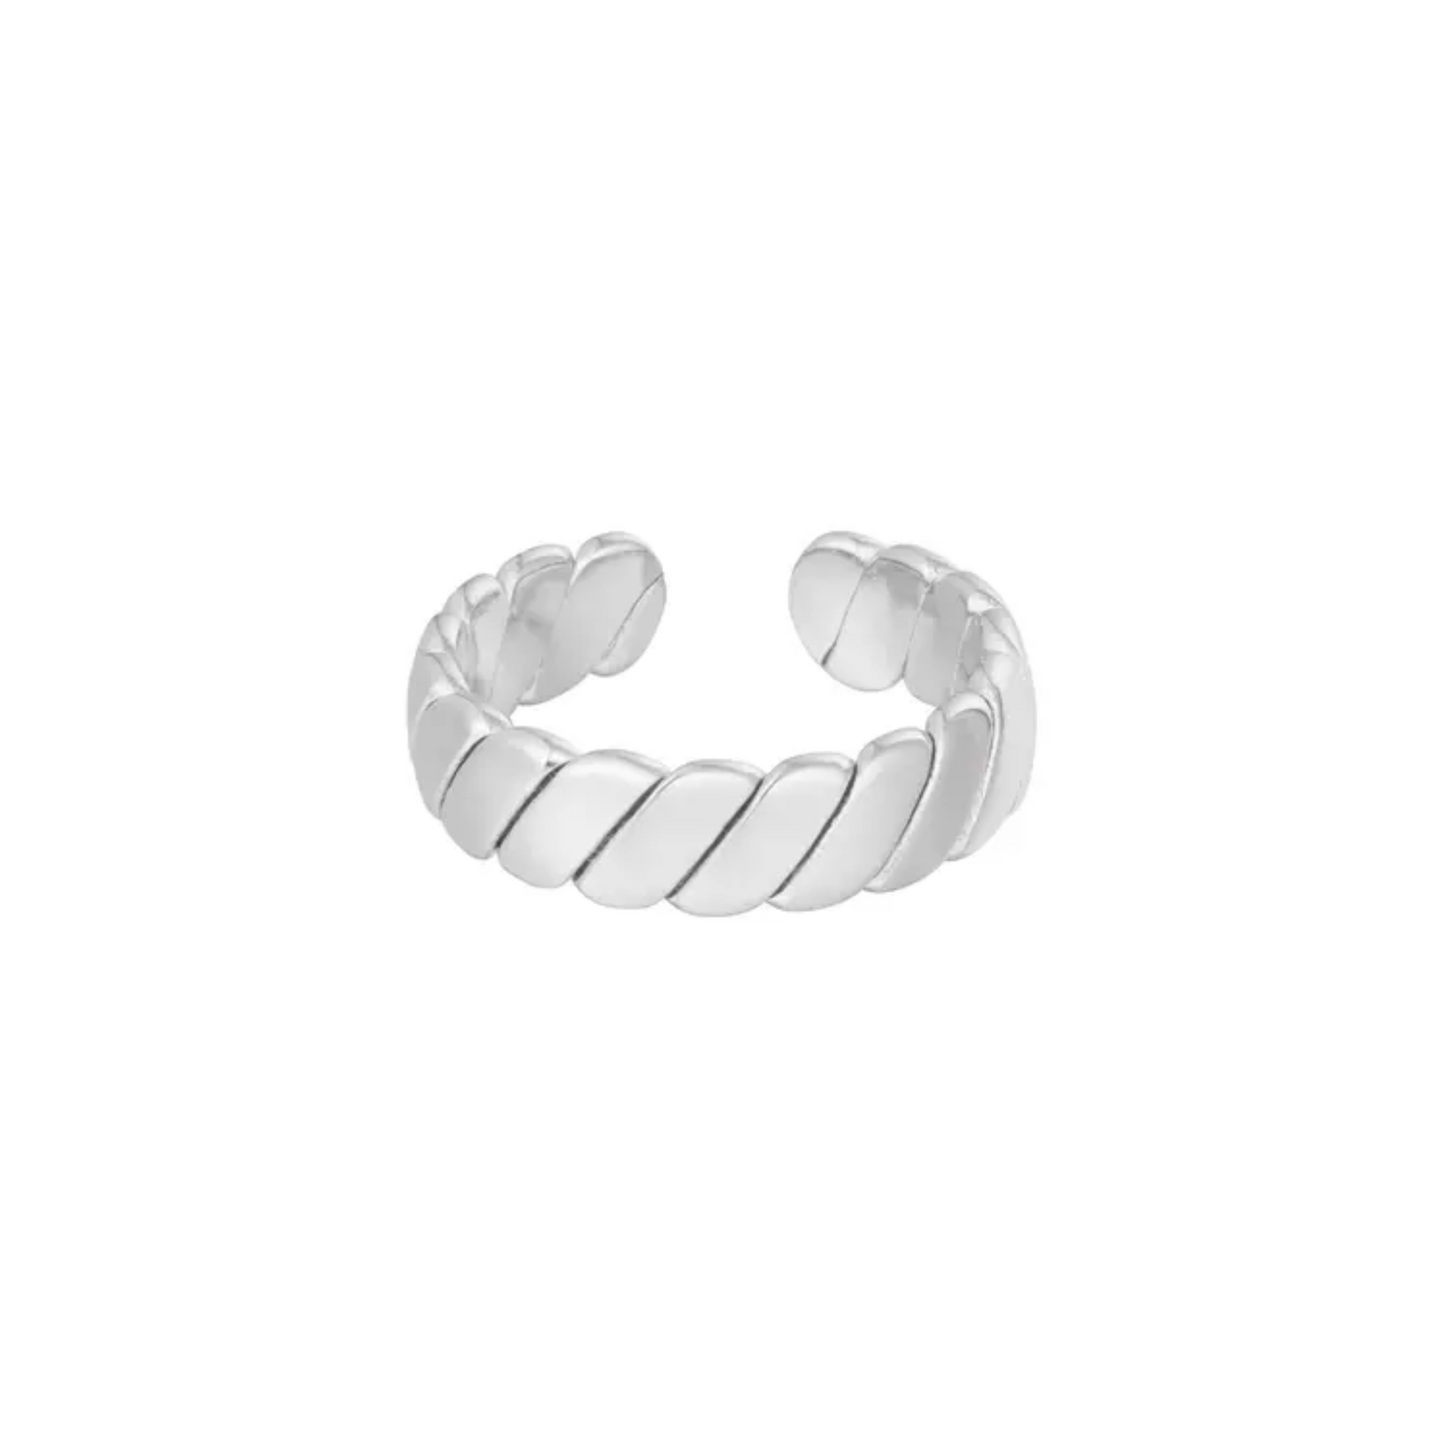 Yehwang | Ring Belle van zilver stainless steel | Conceptstore Sisalla